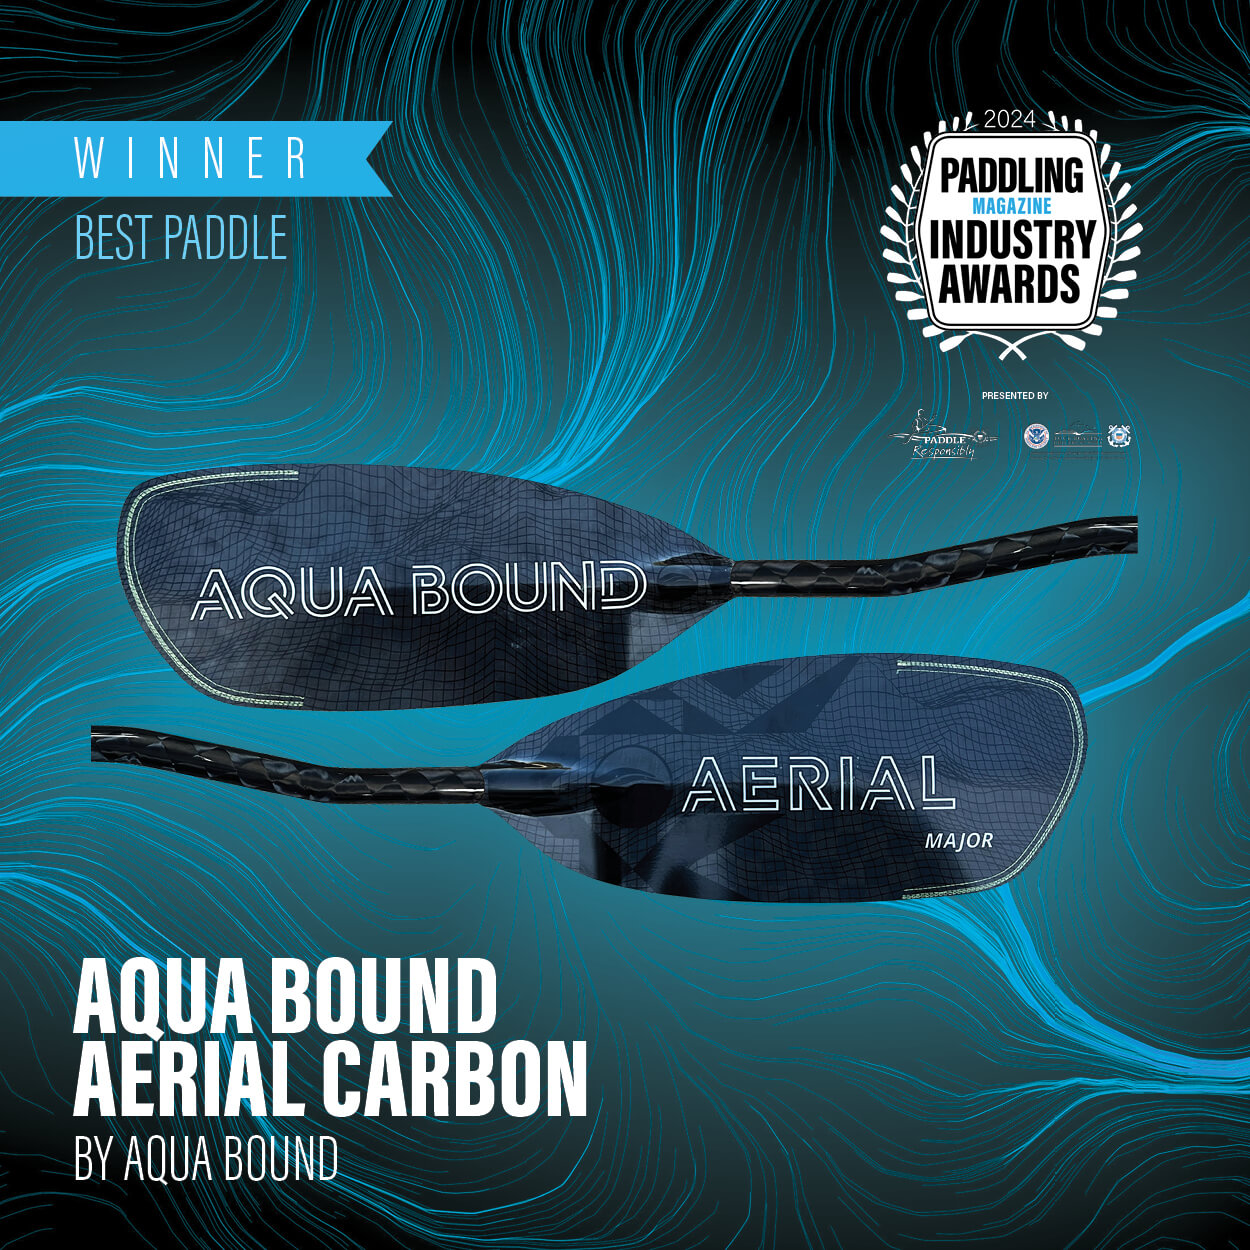 Aerial Major Carbon 4-Piece Versa-Lok Crank Shaft Kayak Paddle